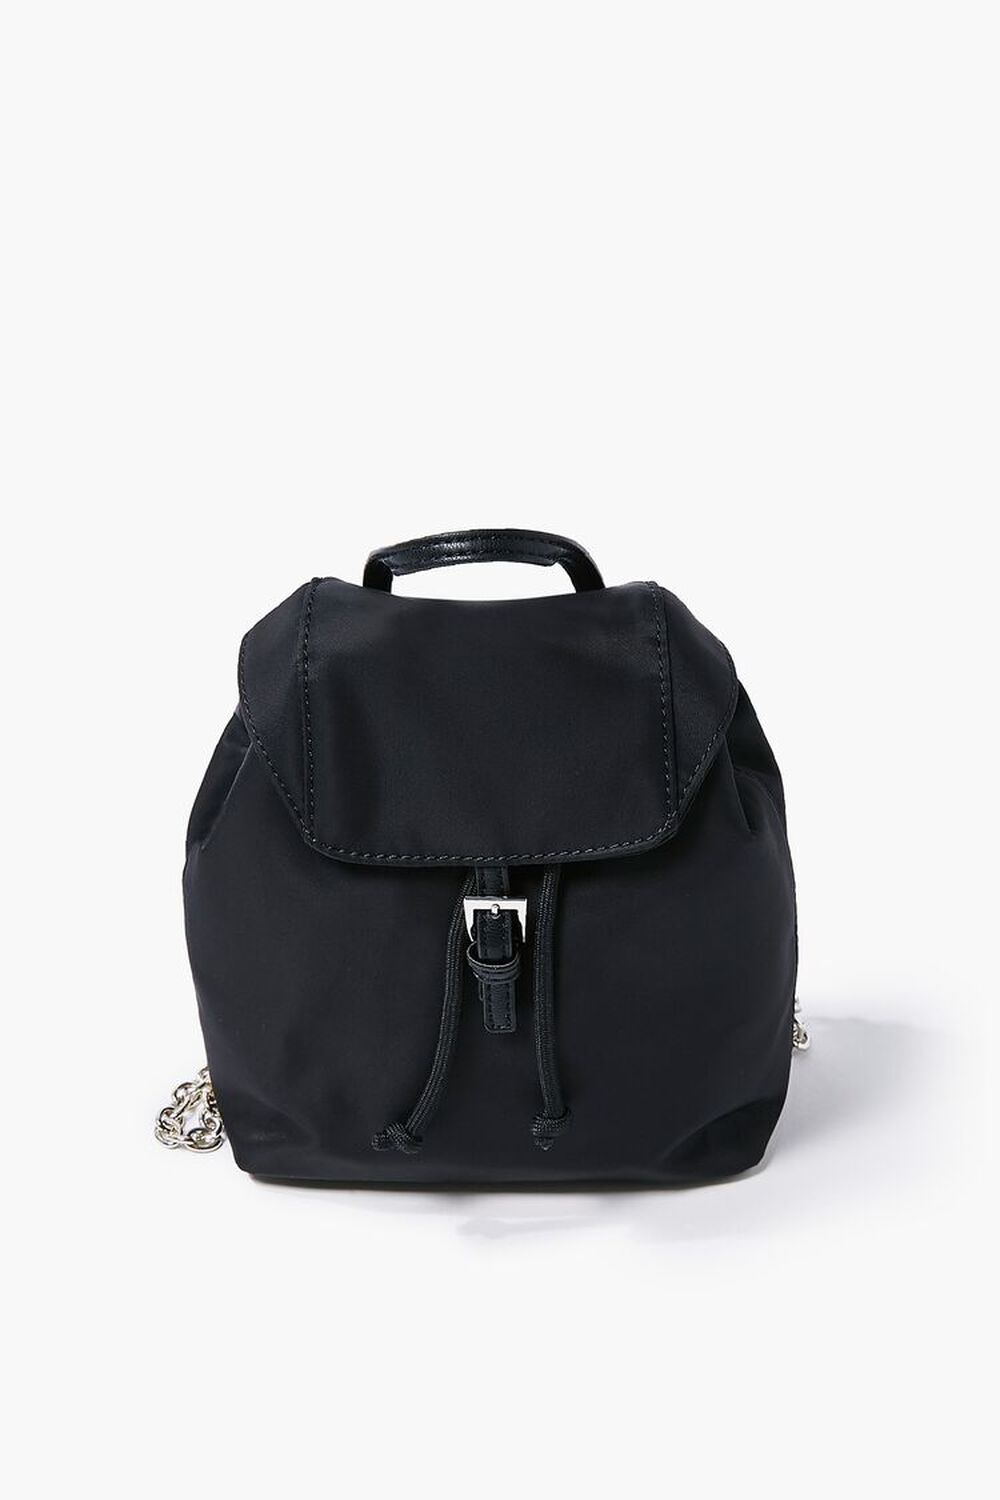 BLACK Drawstring Flap-Top Backpack, image 1